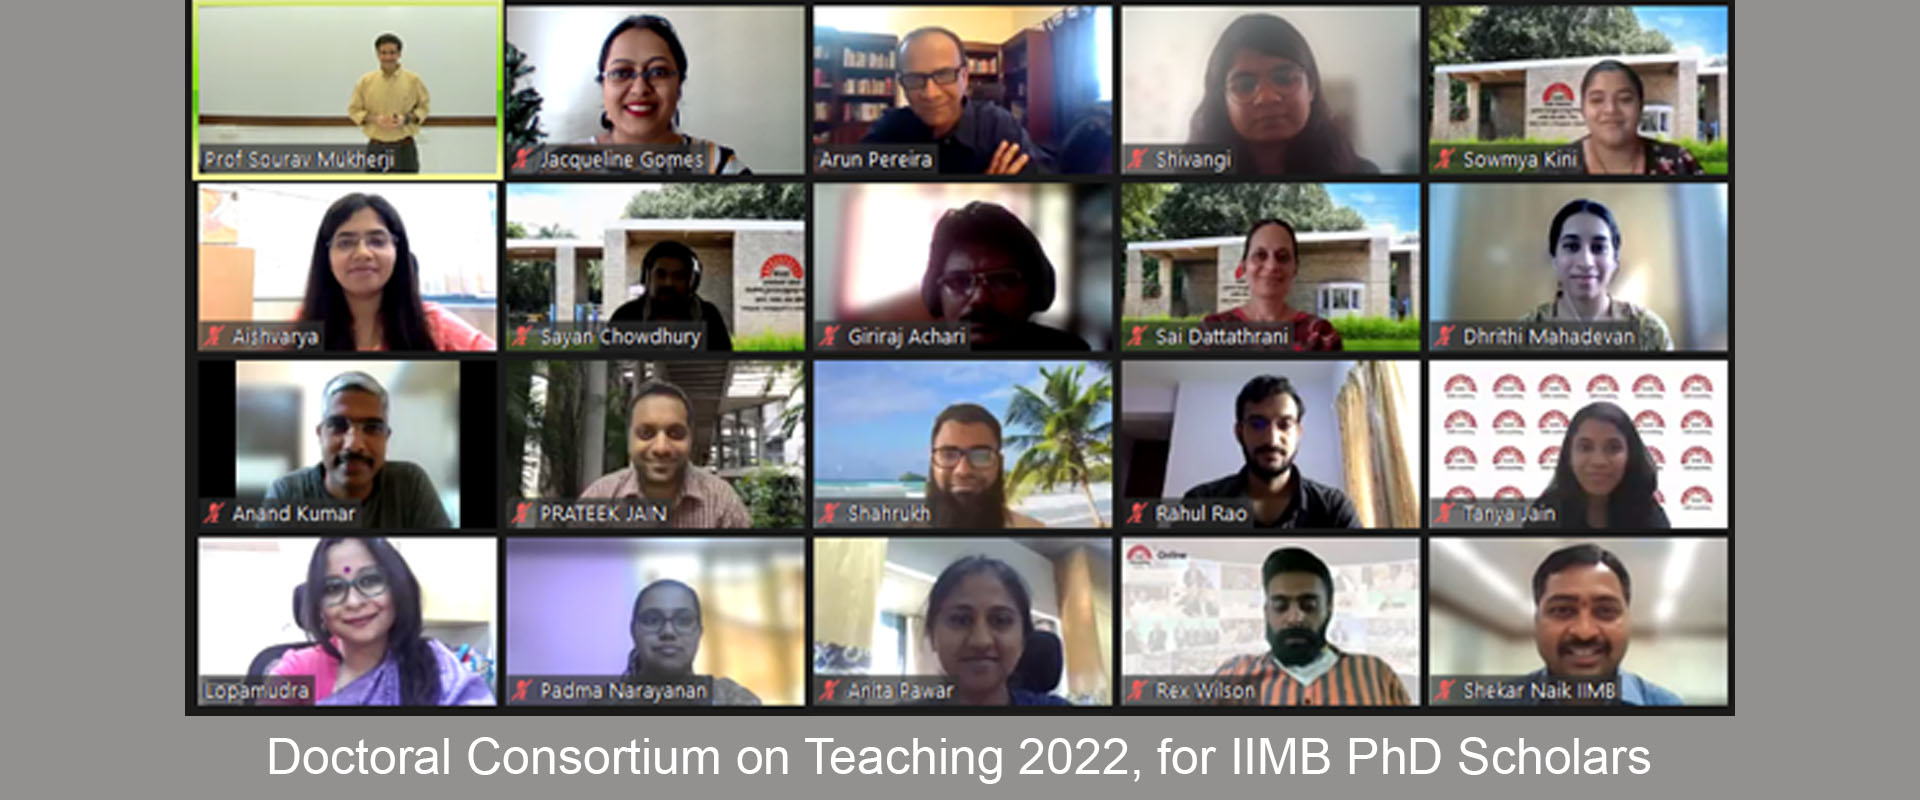 Doctoral Consortium on Teaching 2022, for IIMB PhD Scholars